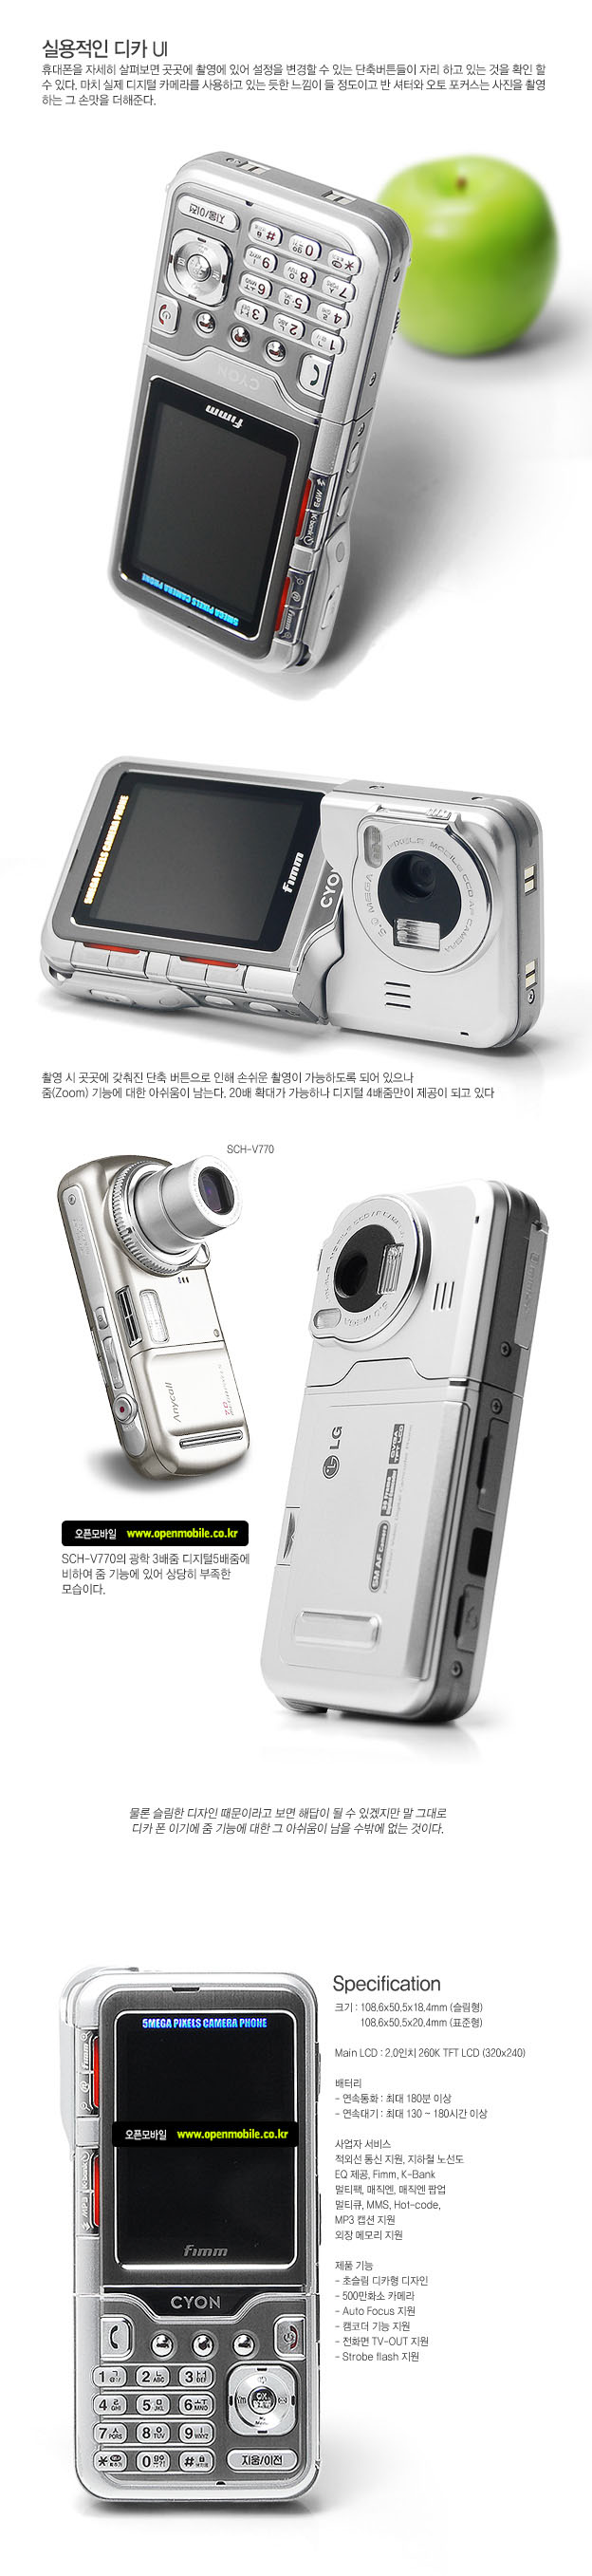 韩国LG-KV5500手机设计